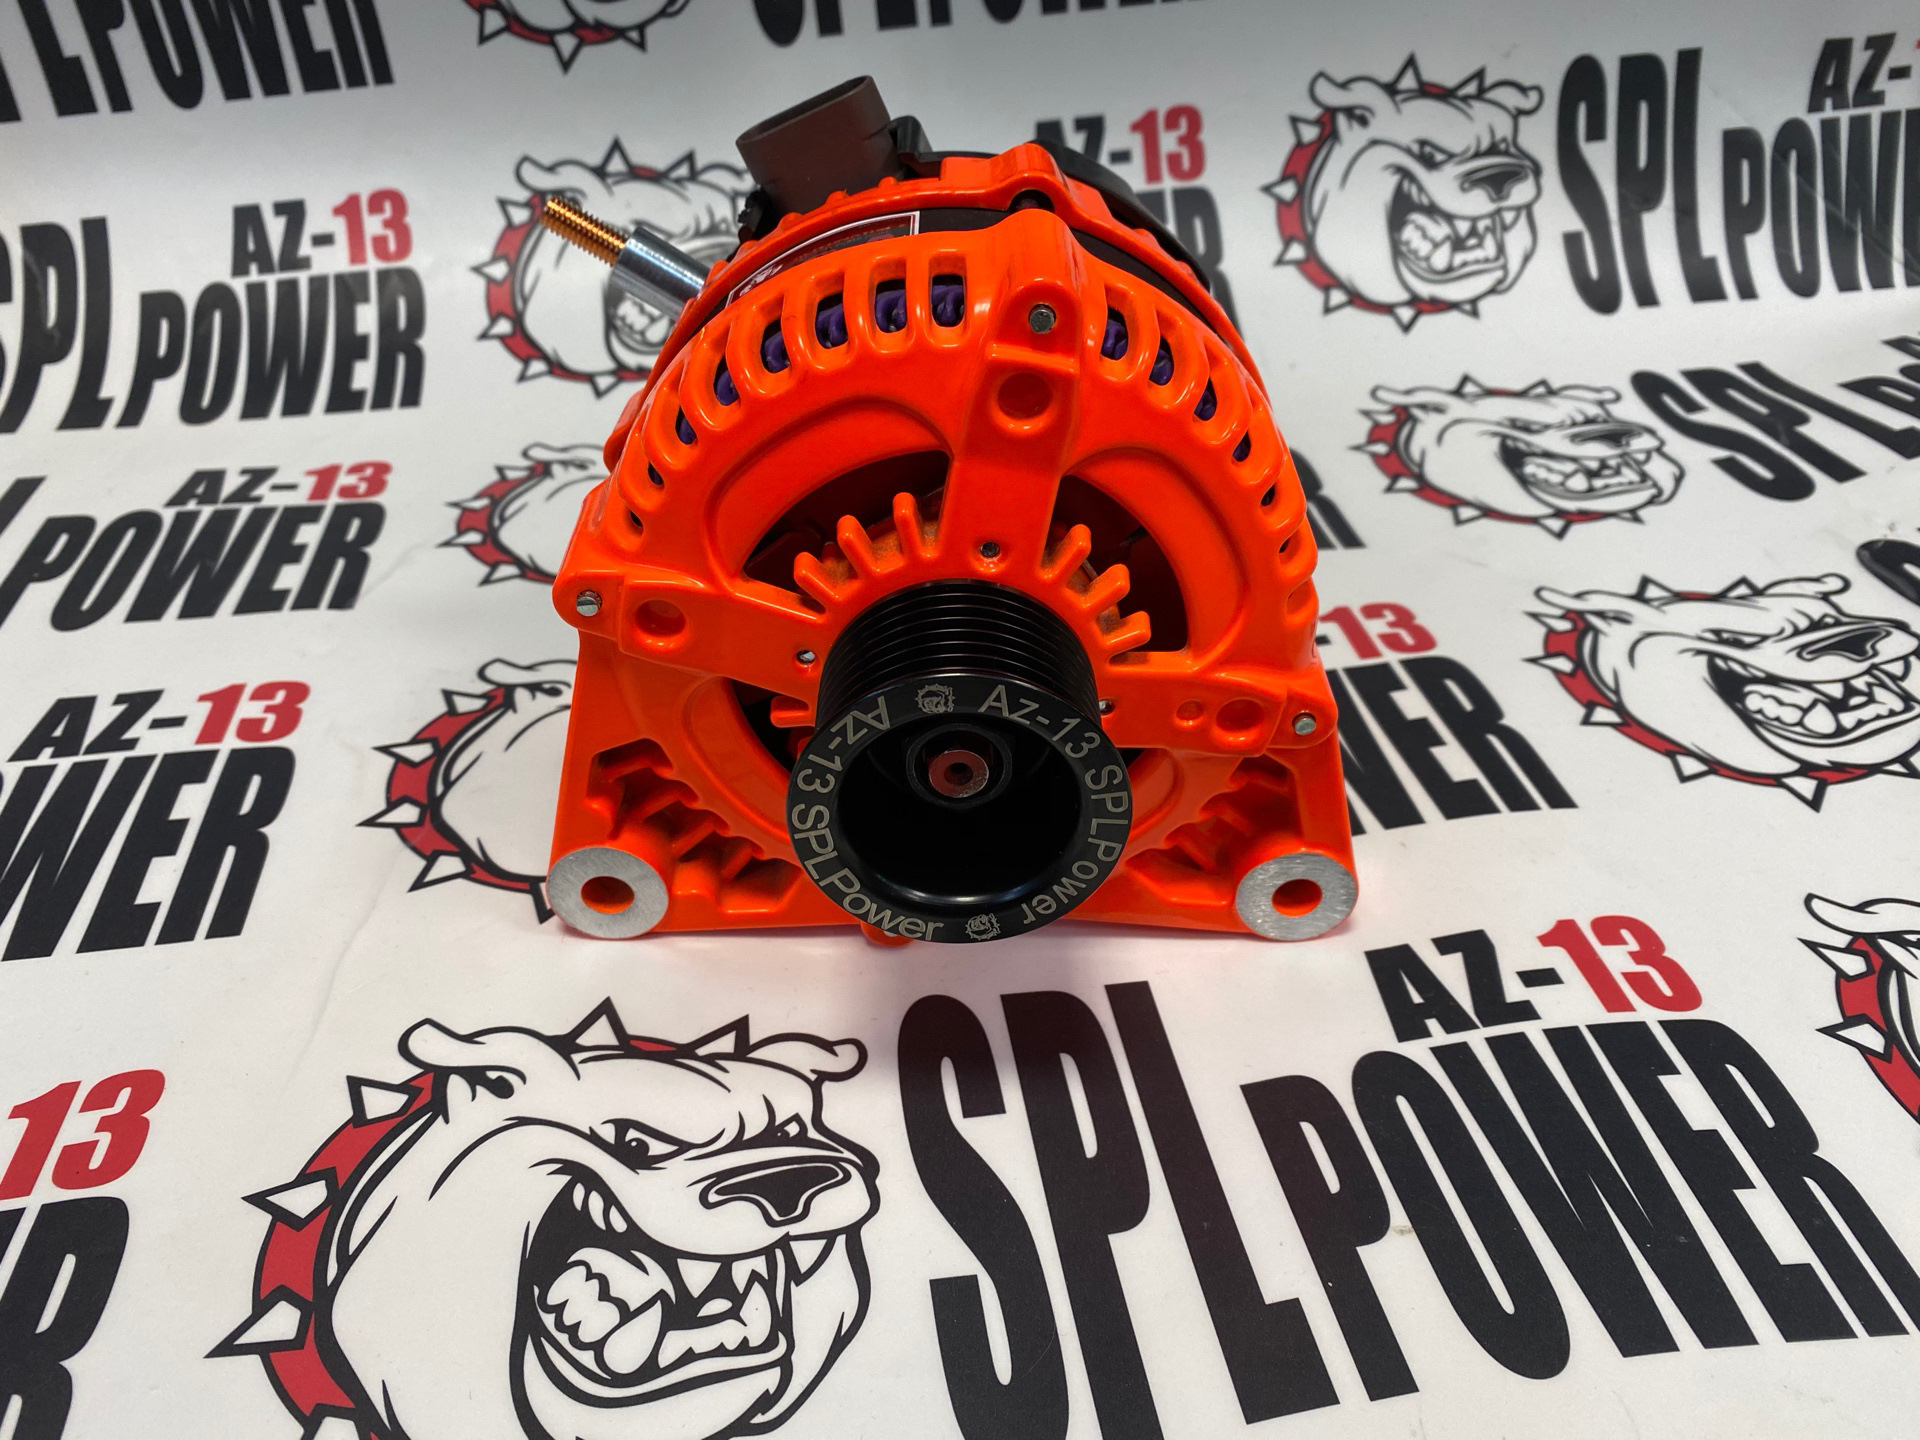 Az 13 SPL Power Генератор. Az-13 SPL Power шкив генератора 40 мм. Az 13 SPL Power ВАЗ 2107. Az 13 SPL Power логотип. Азом а5